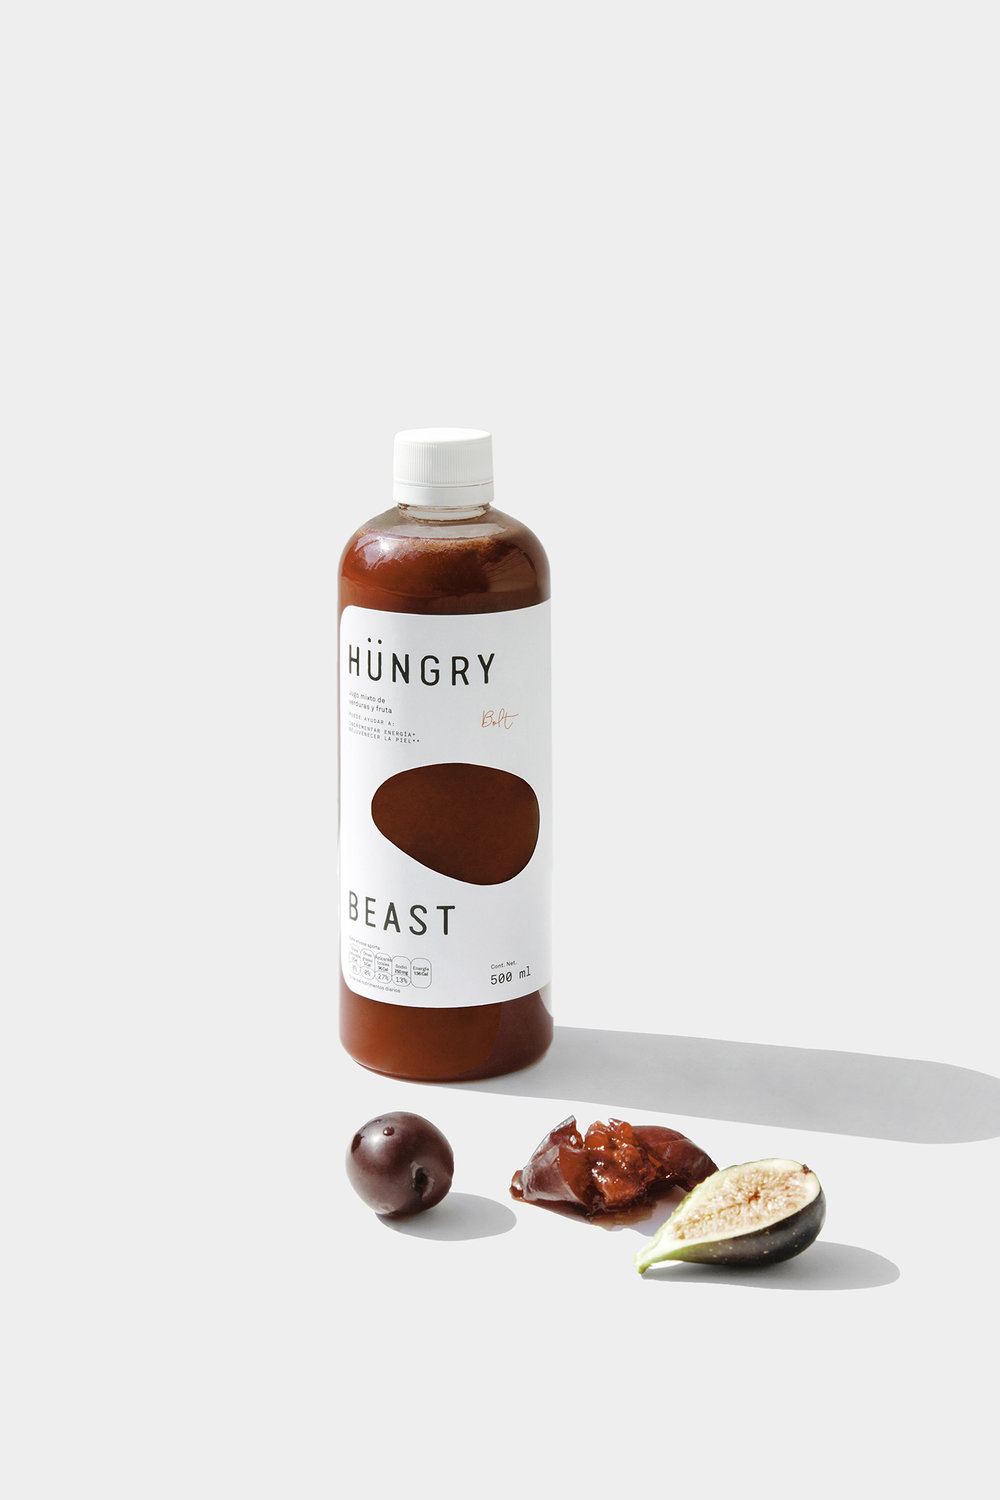 02-Hungry-Beast-Cafe-Juice-Bar-Packaging-Design-Savvy-Mexico-BPO.jpg